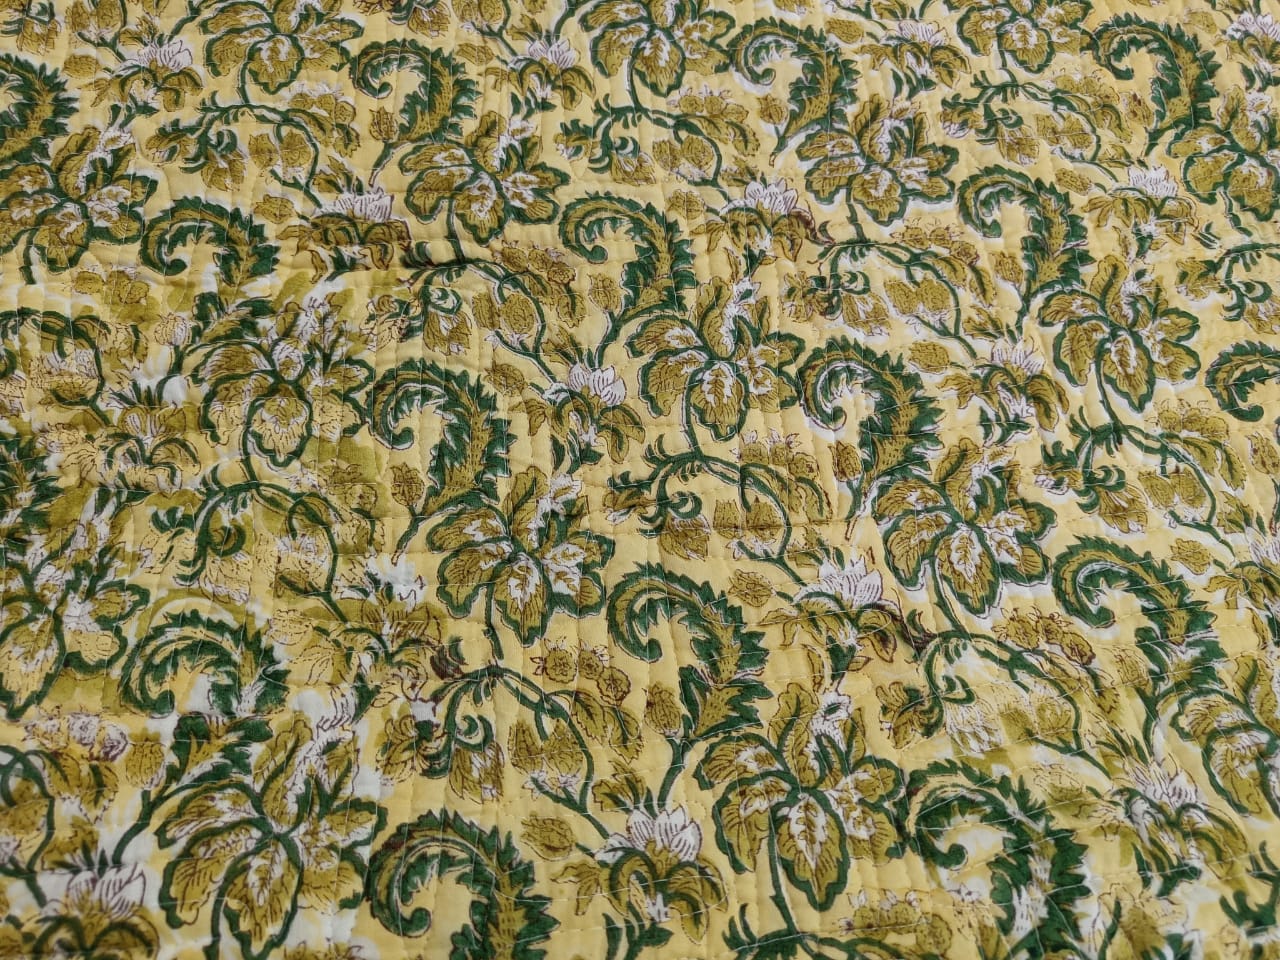 Roysha 2022 All Season Handmade Lightweight Queen Quilt, Jaipuri Block printed, Queen Bedspread, 100% Cotton Throw, Yellow and Green